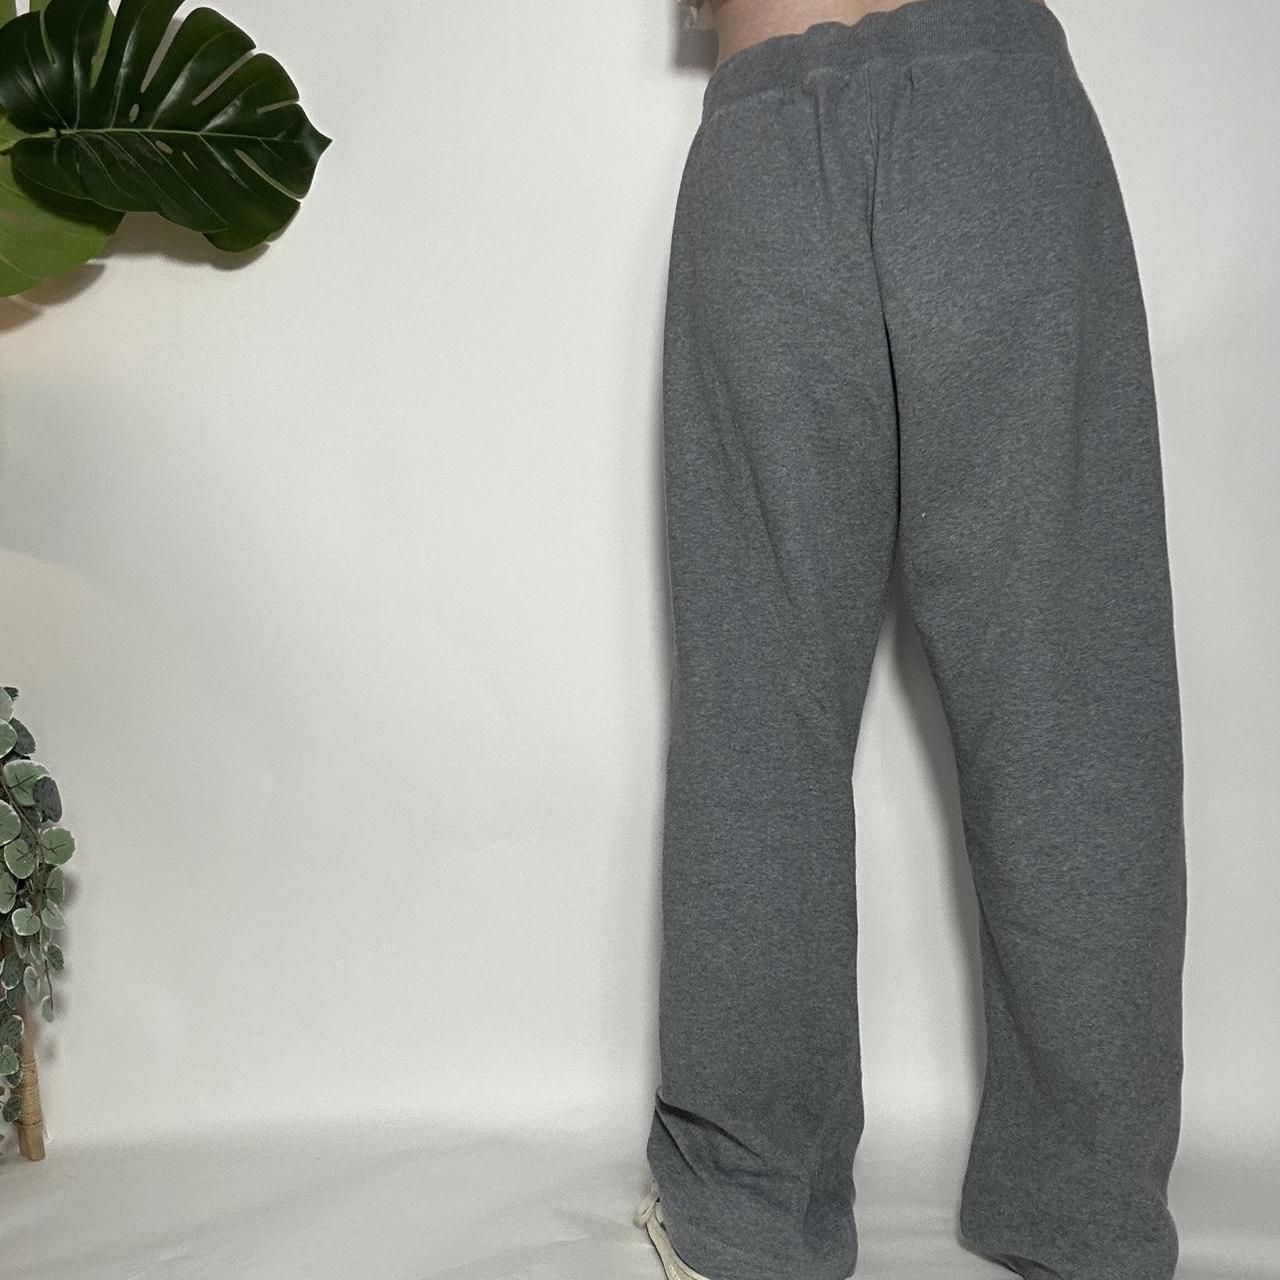 Vintage 90s Nike embroidered grey track pants